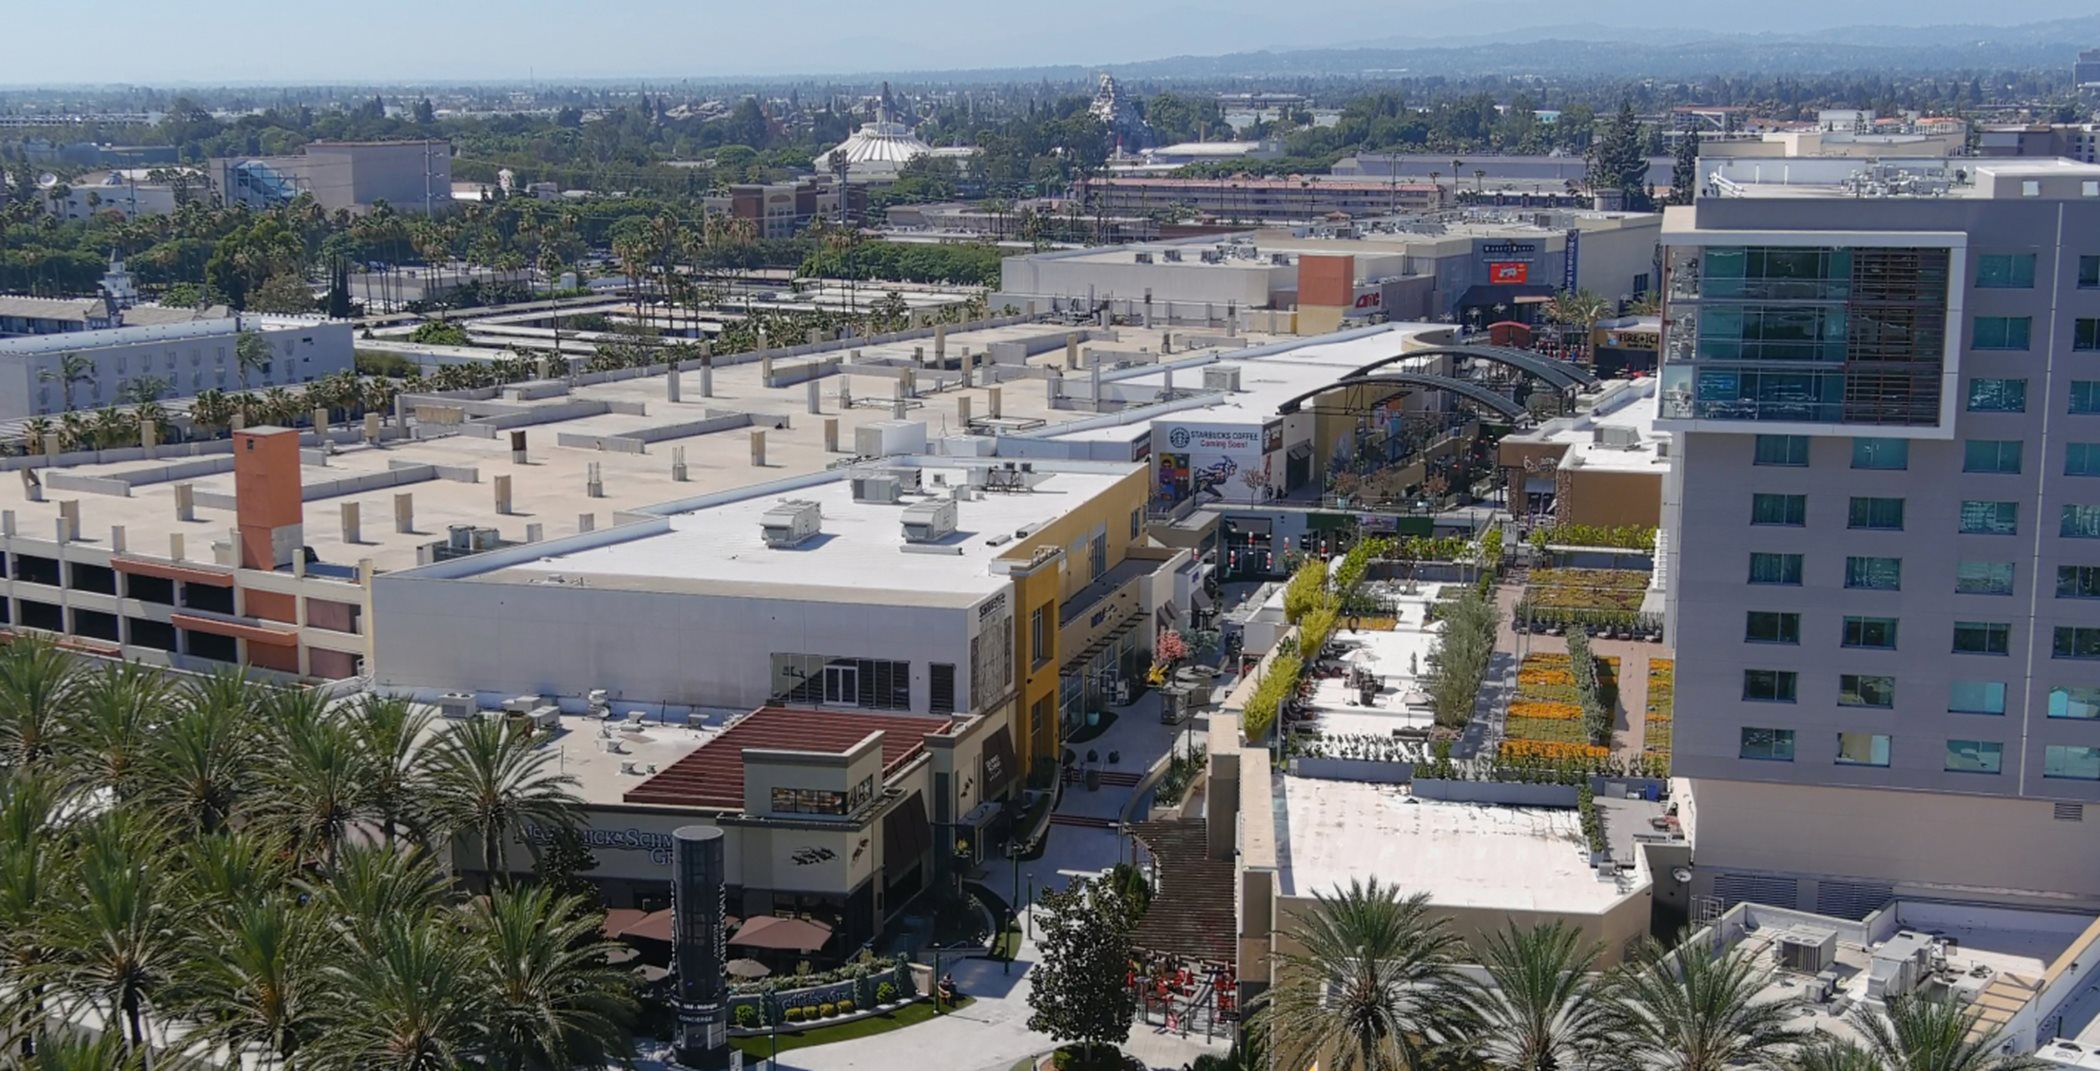 Aerial view of Gardenwalk outdoor mall